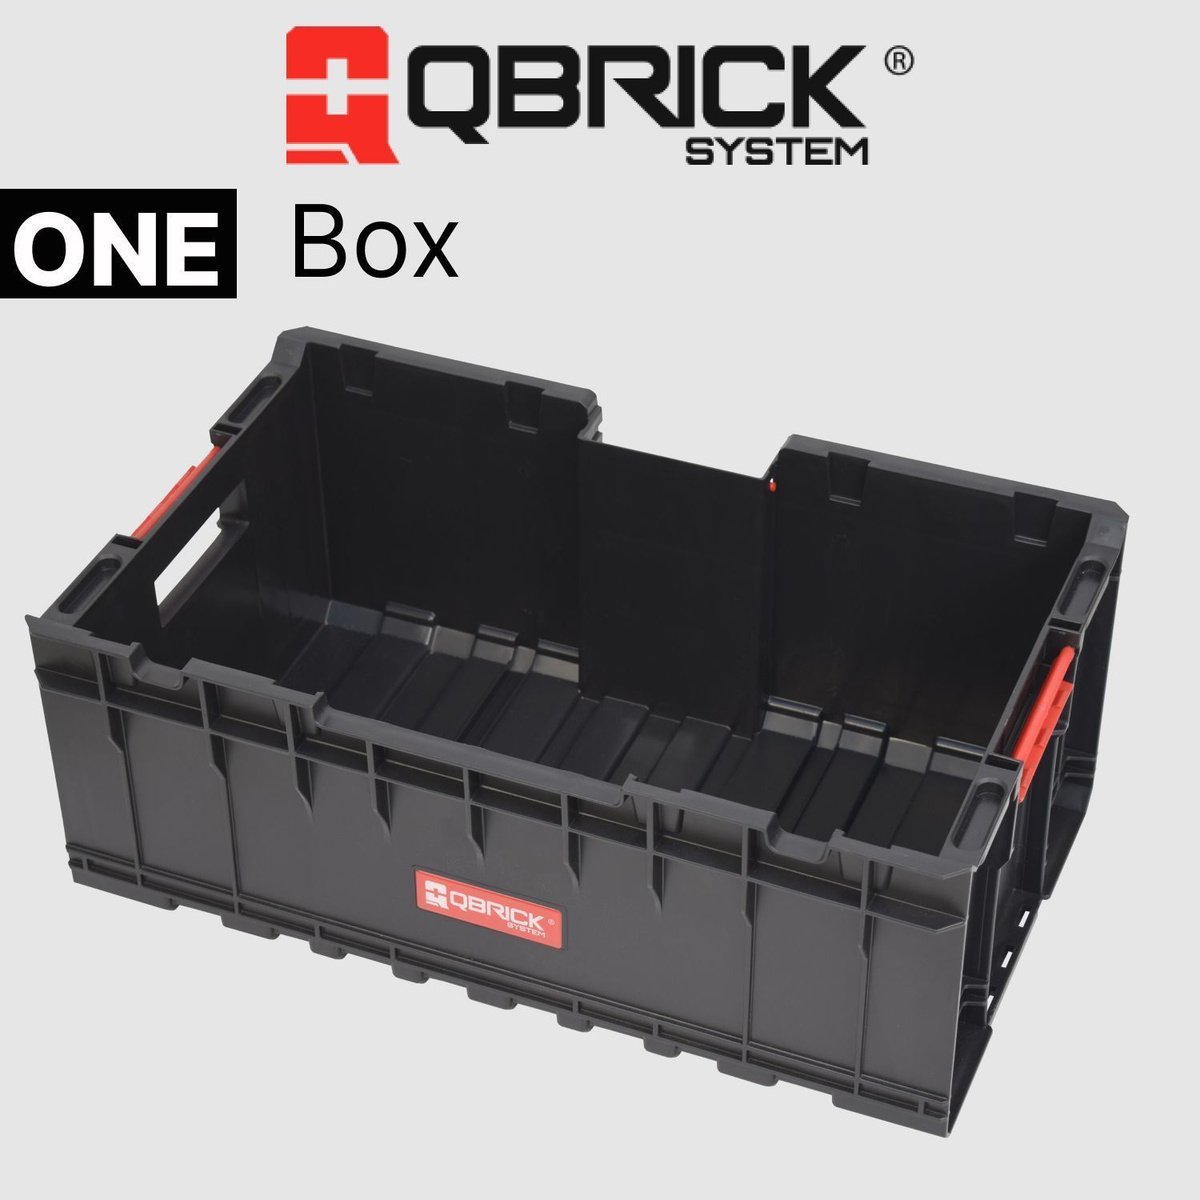 Qbrick System ONE Box